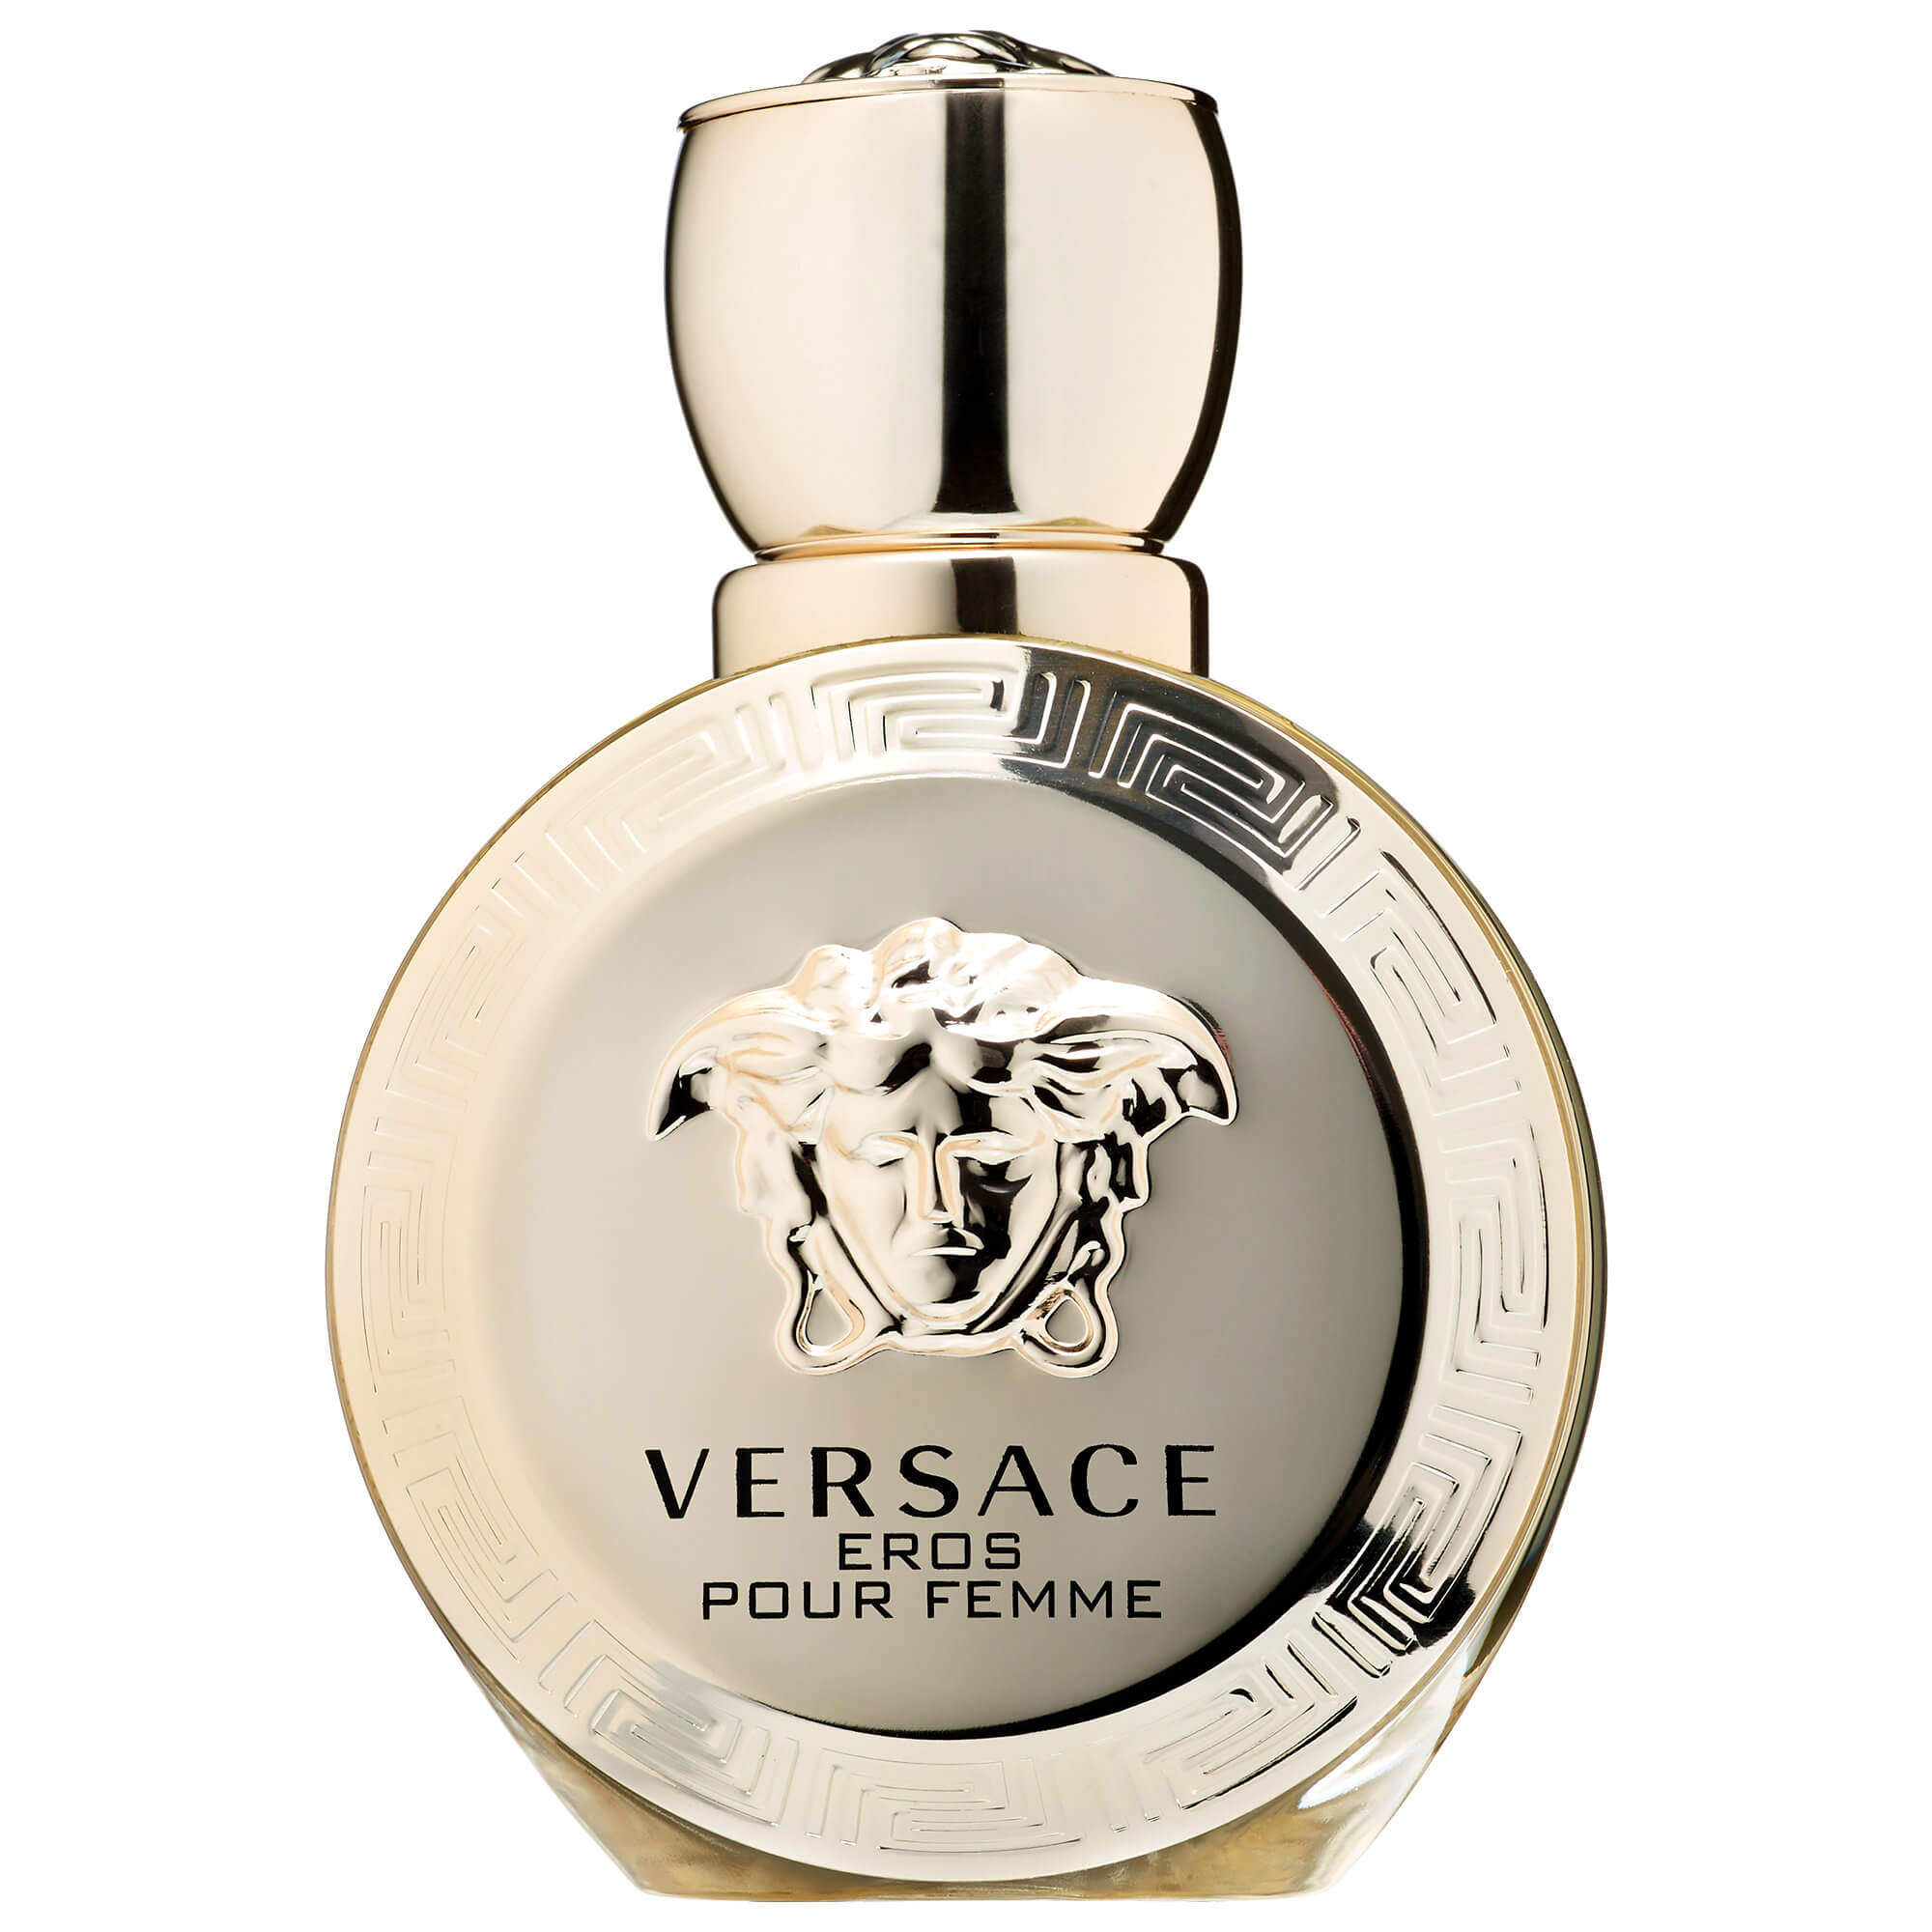 Eros Pour Femme by Versace $14.95/month | Scentbird